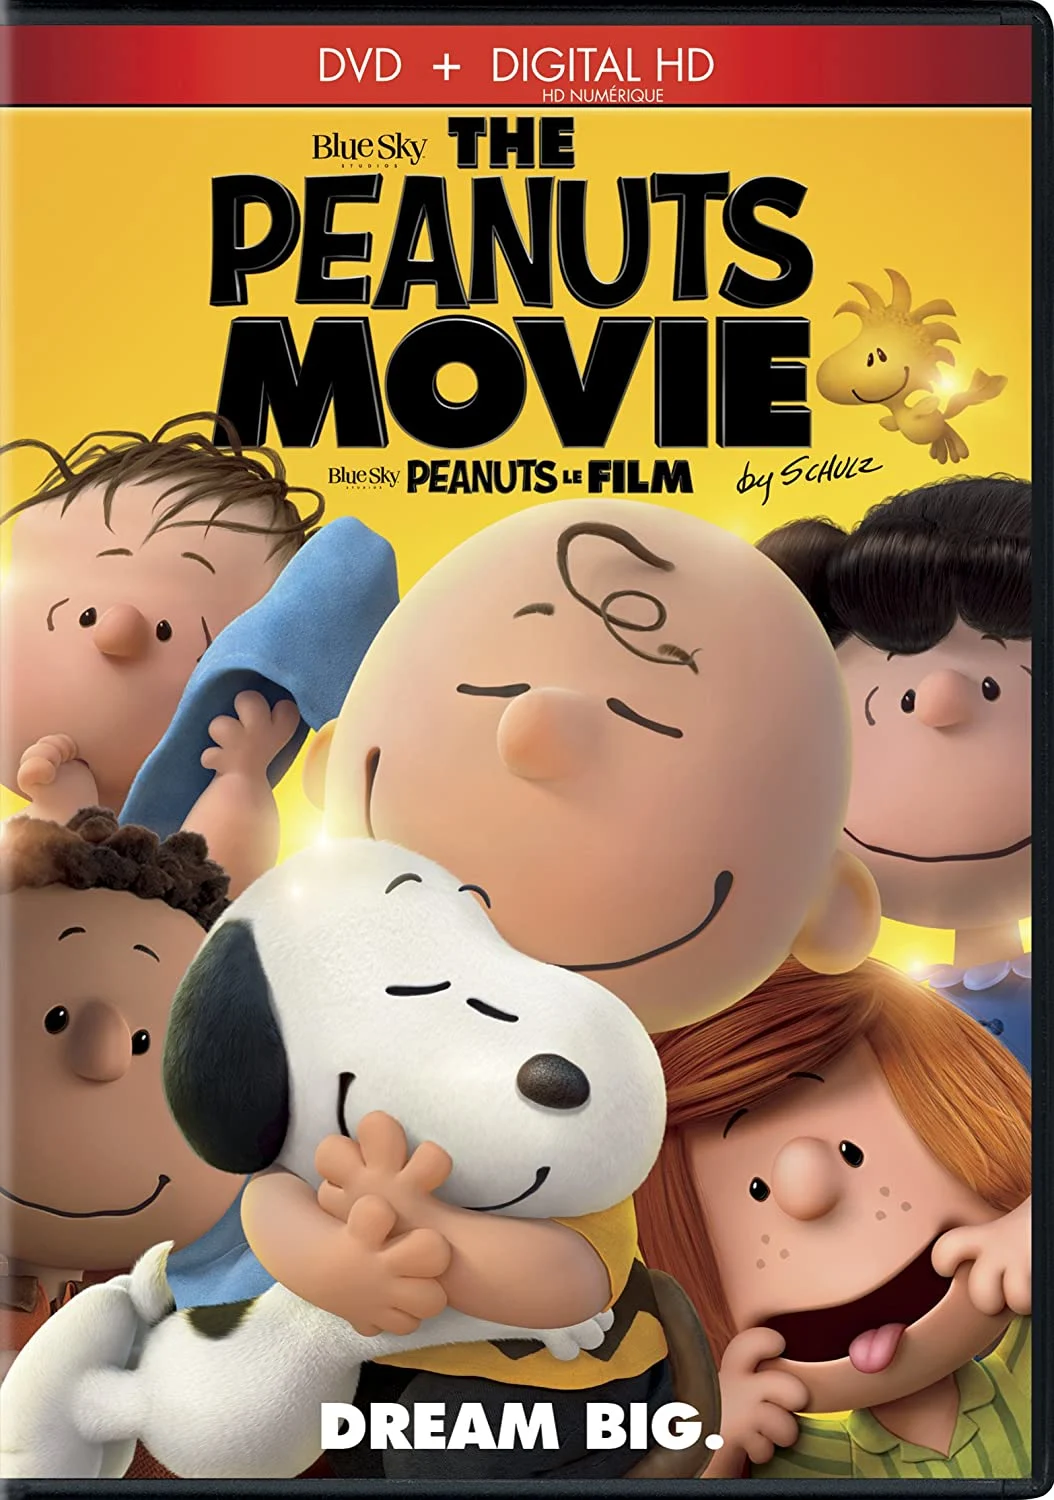 Peanuts Movie, The (DVD) on MovieShack